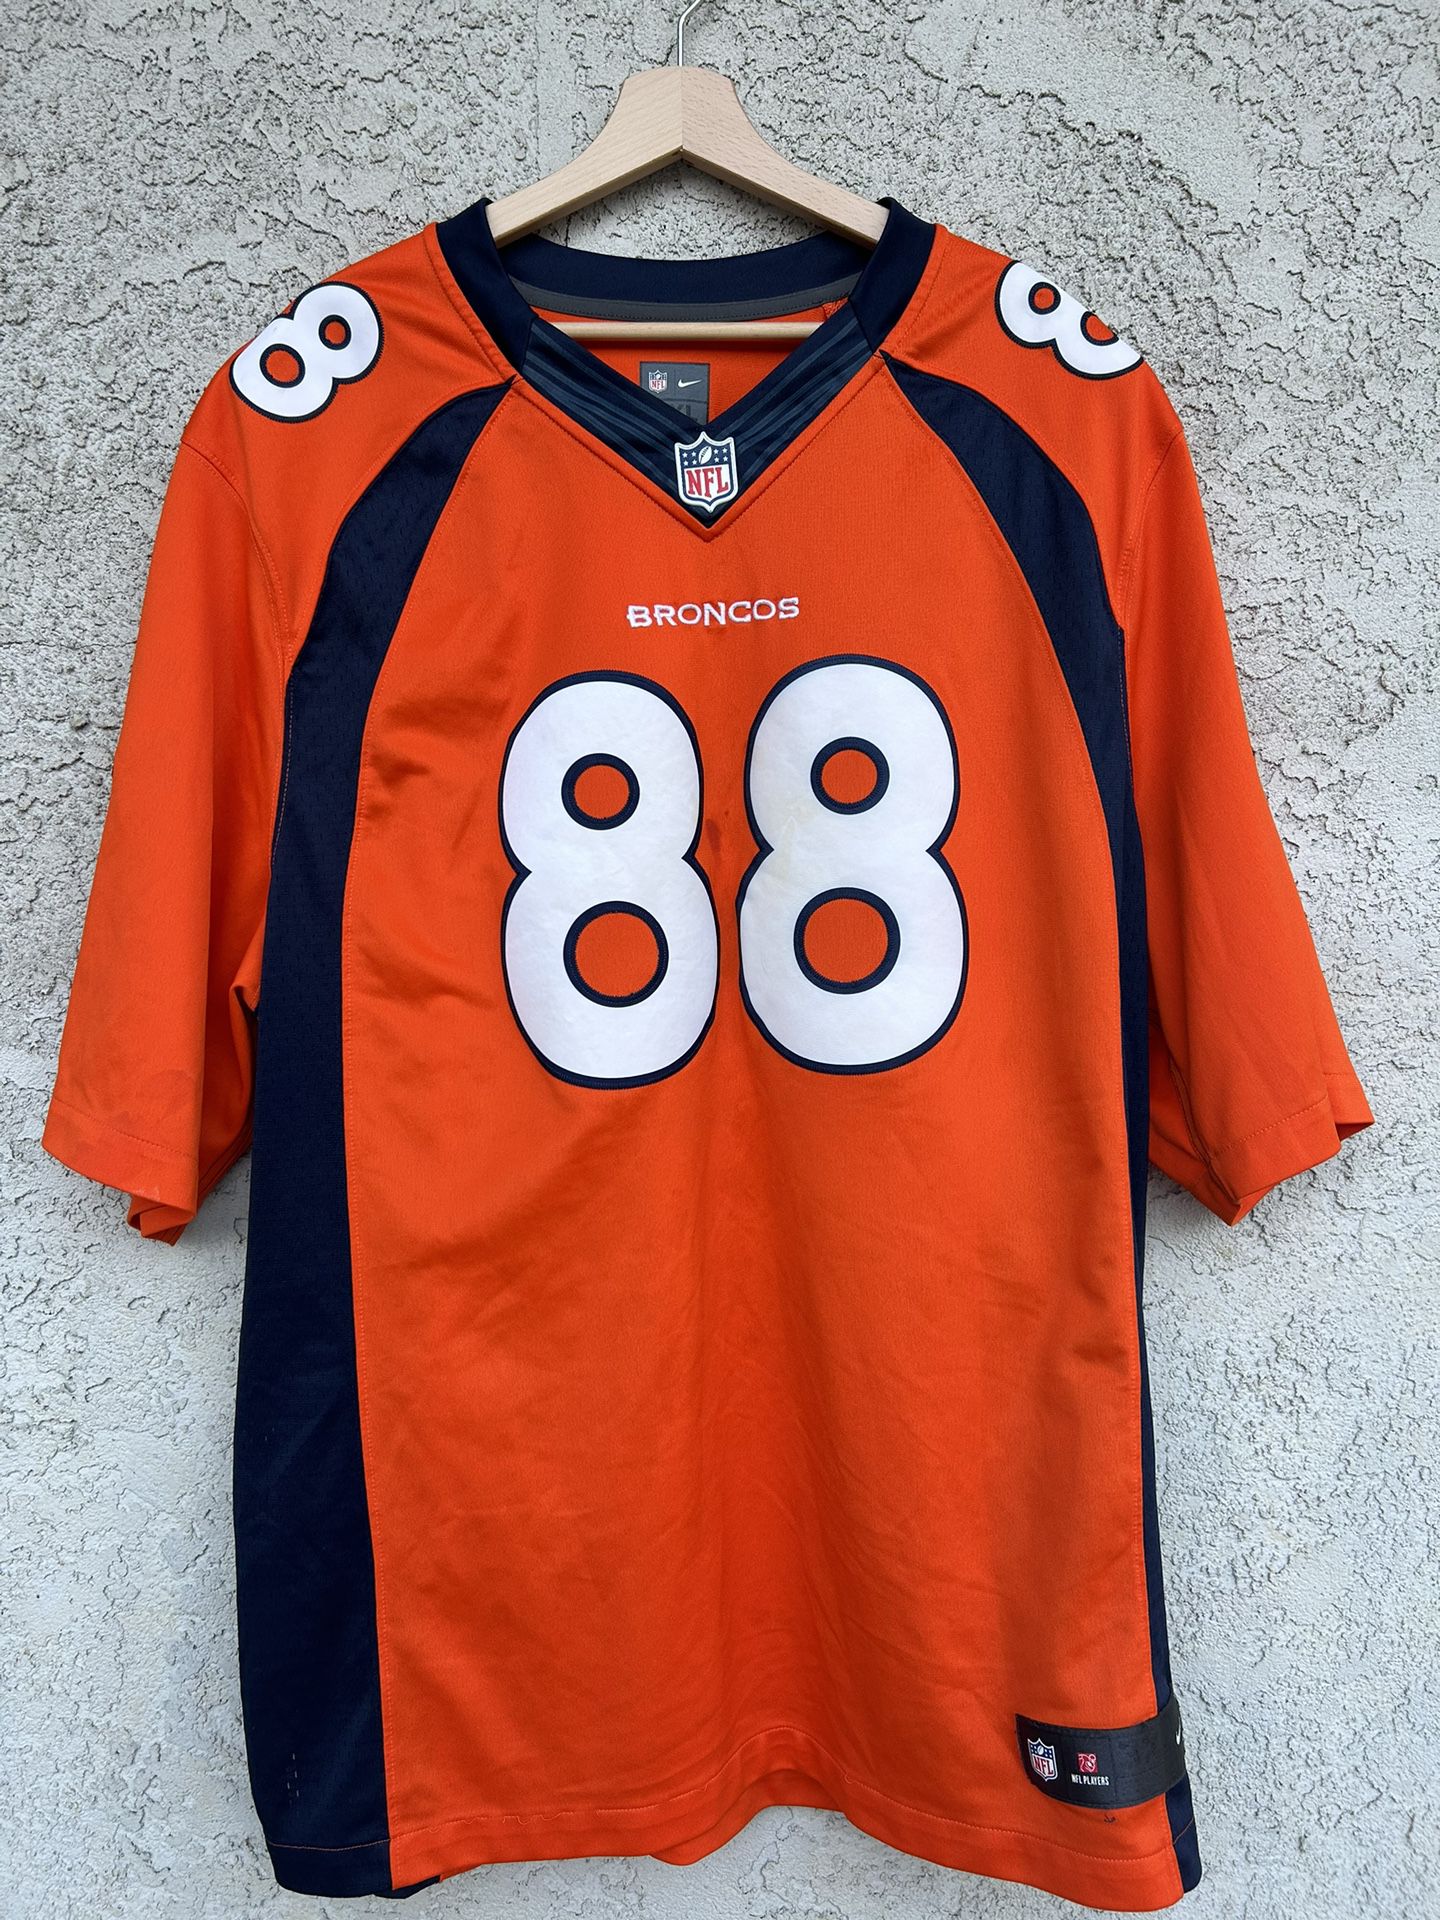 NFL Denver Broncos Demariyus Thomas 88 Nike On Field Jersey Size XXXL Football